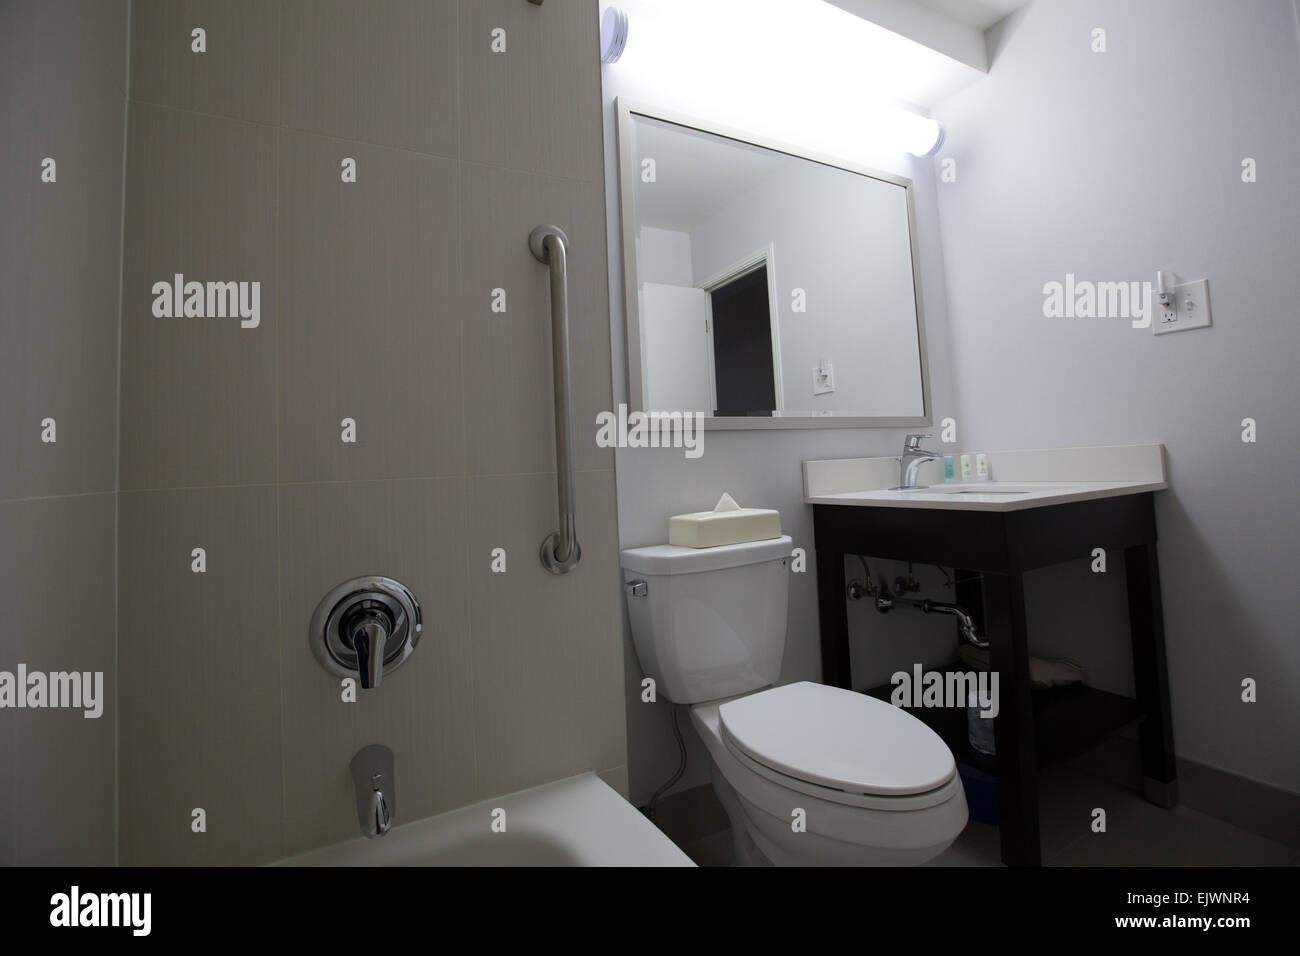 hotel bathroom interior bathtub toilet sink Stock Photo